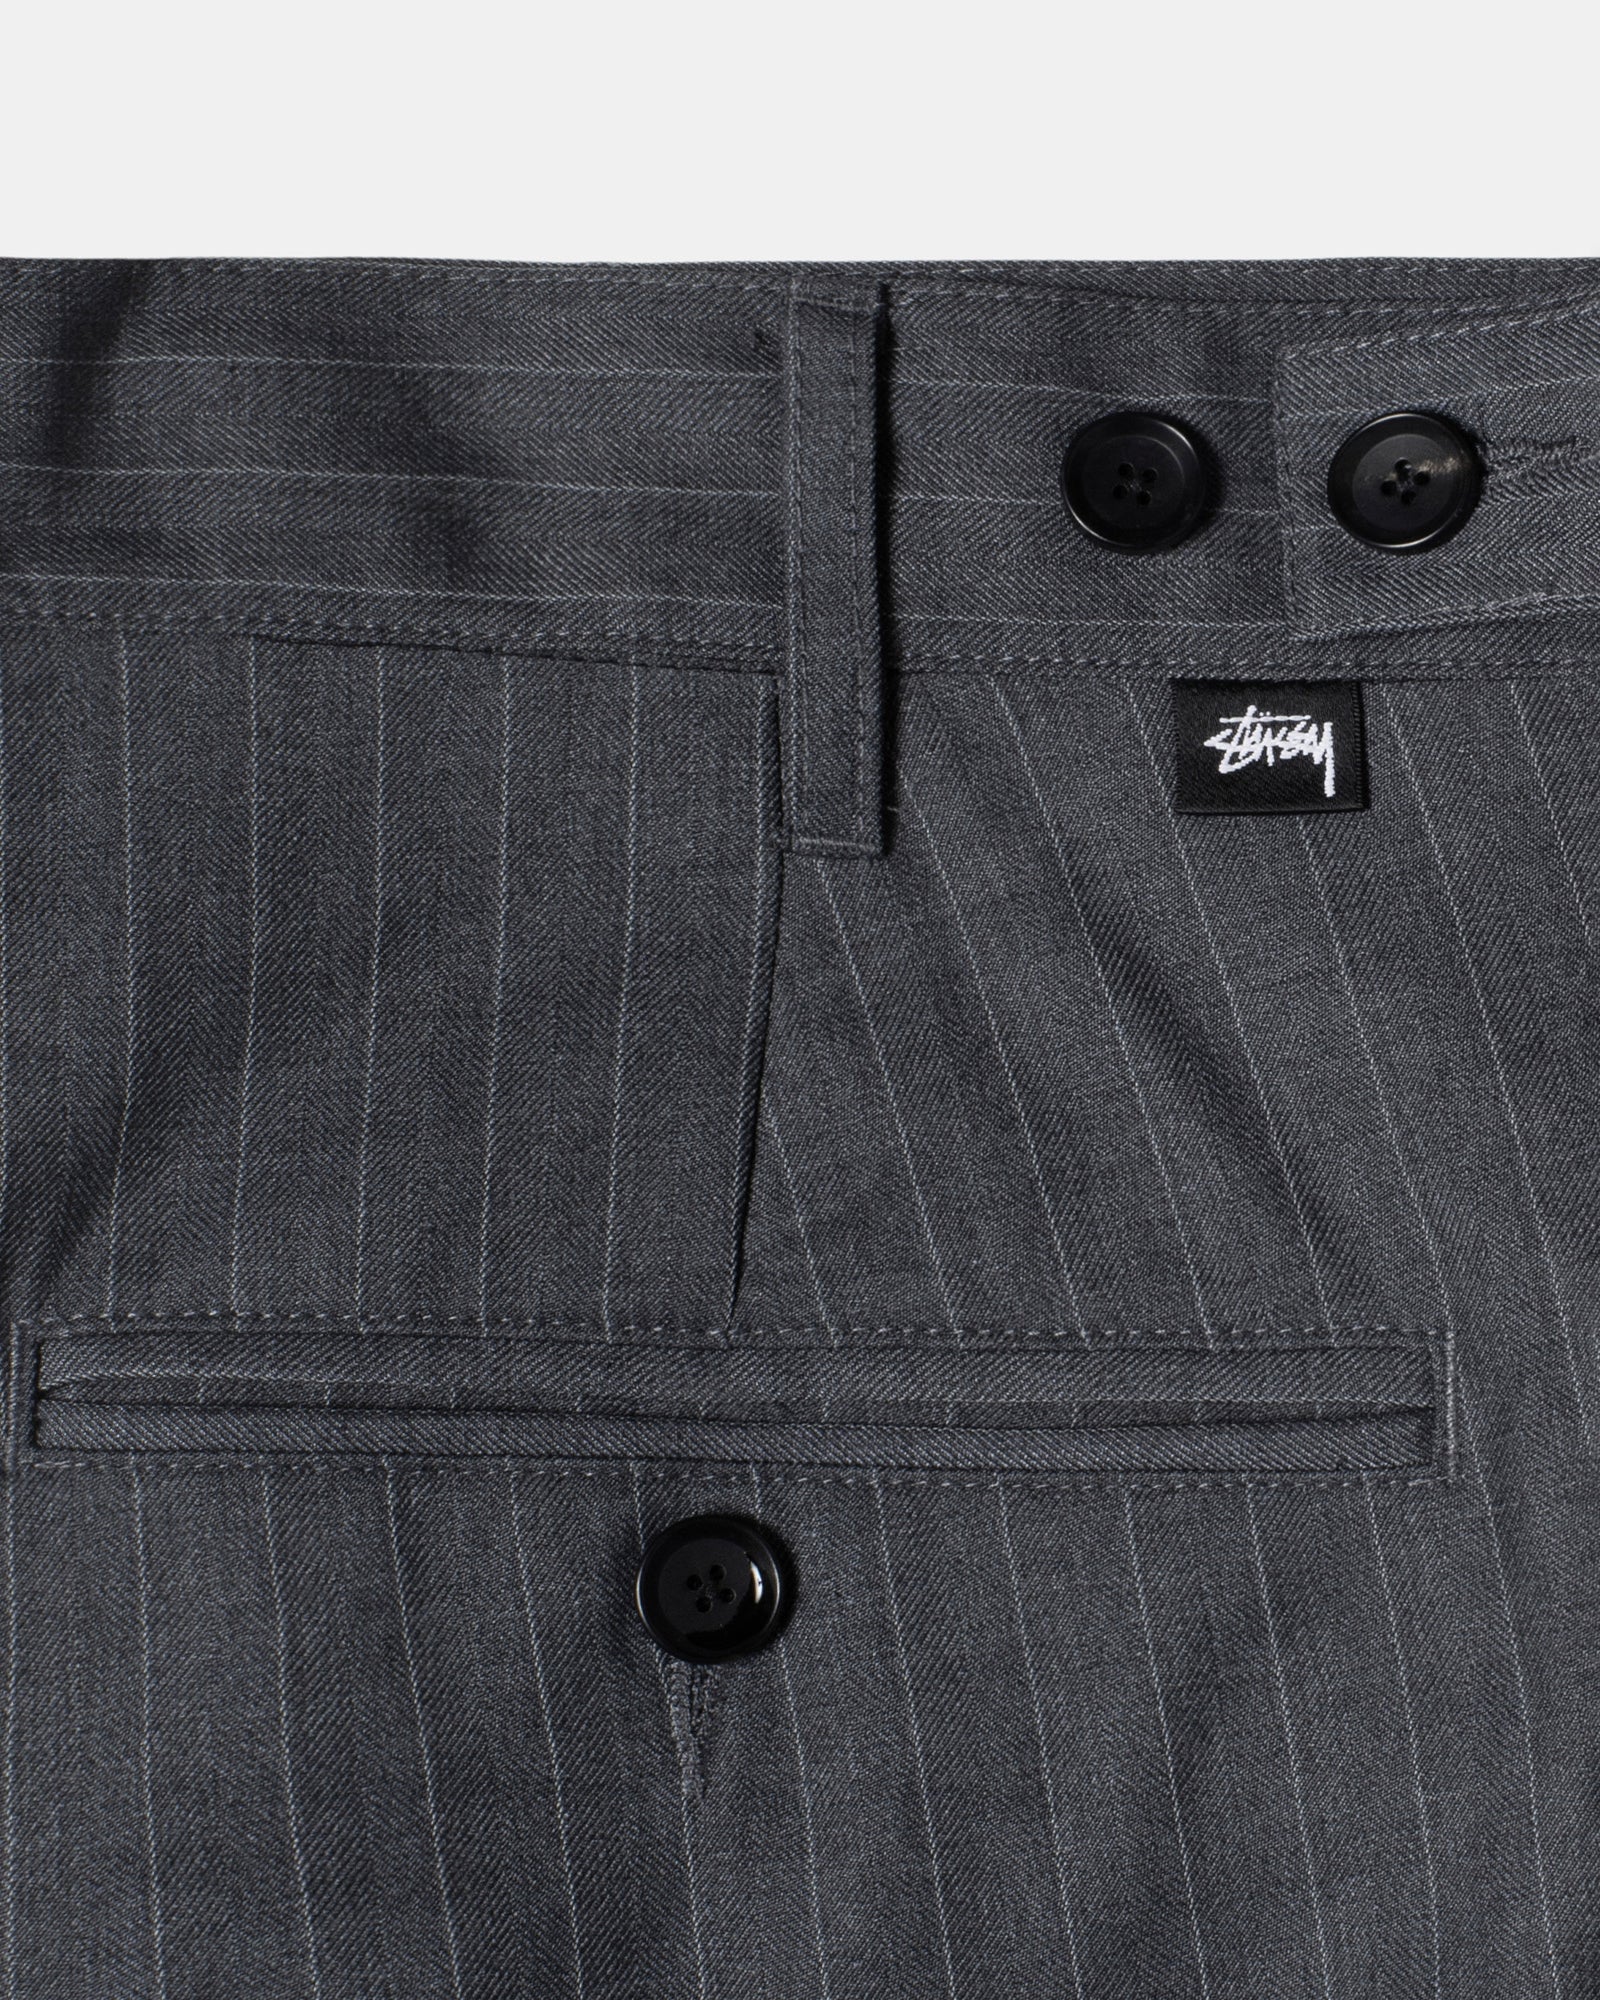 Striped Volume Pleated Trouser - Unisex Pants | Stüssy